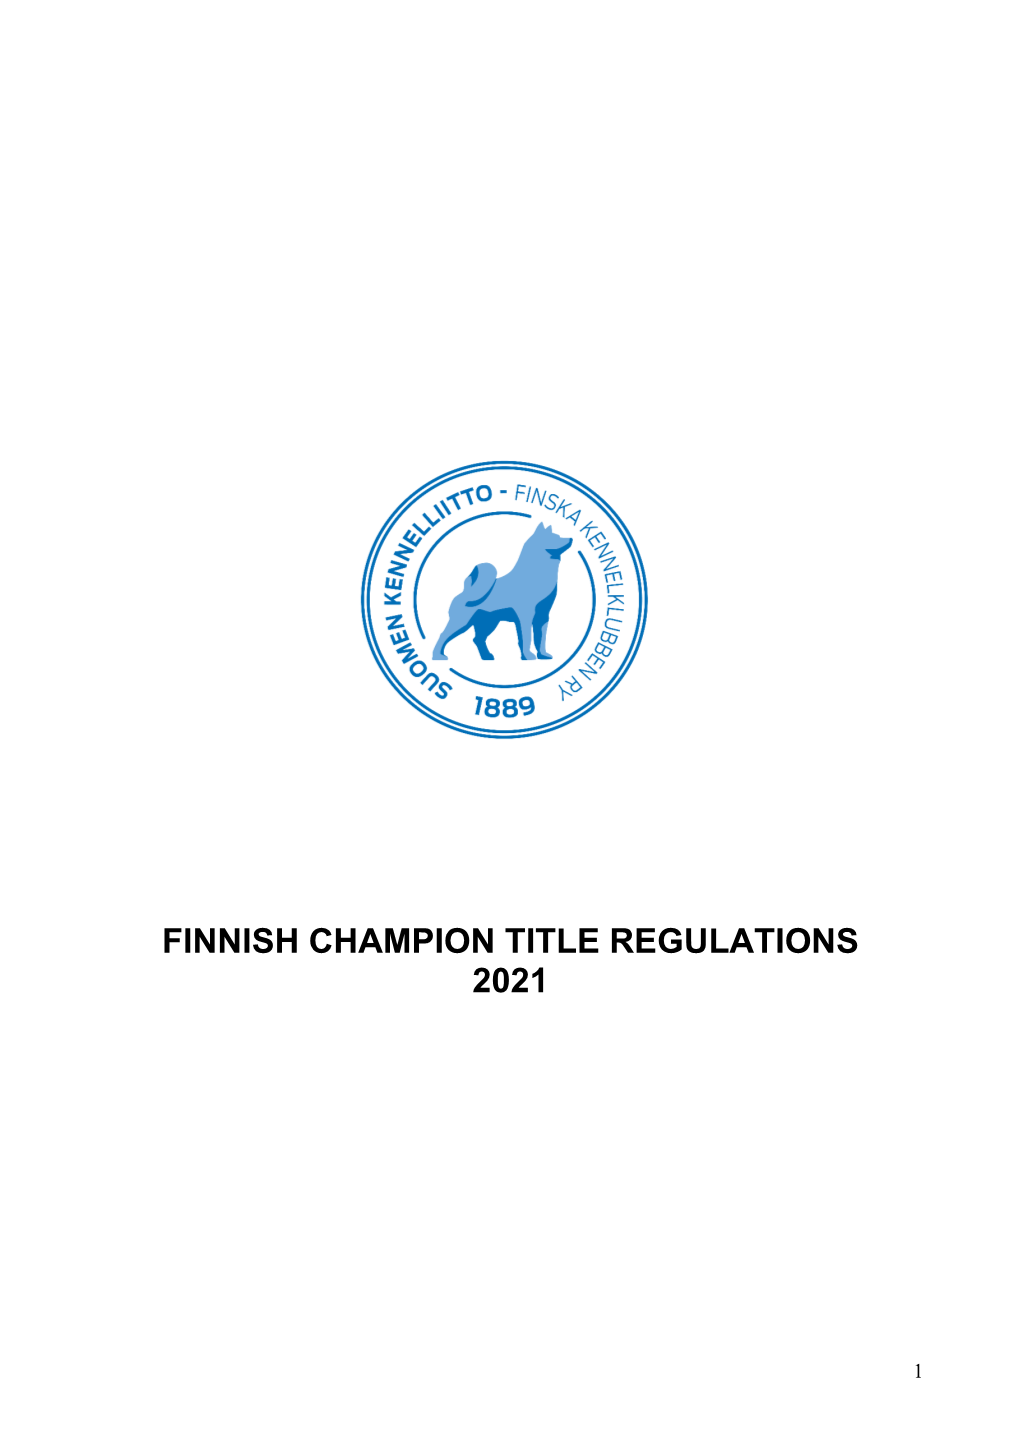 Finnish Champion Title Regulations 2021